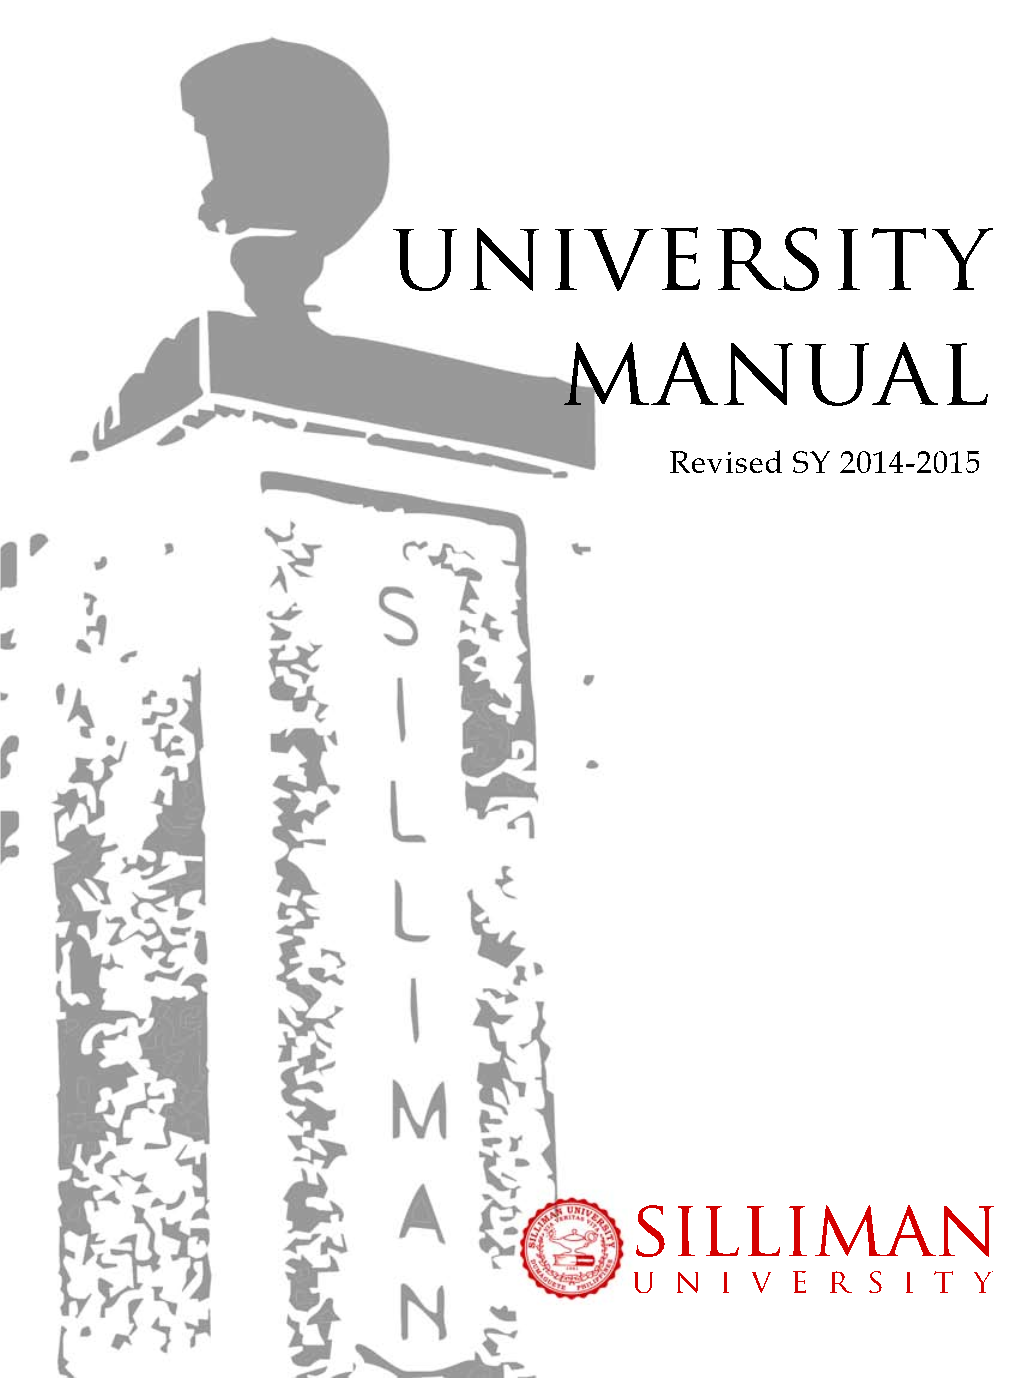 University Manual Revised SY 2014-2015